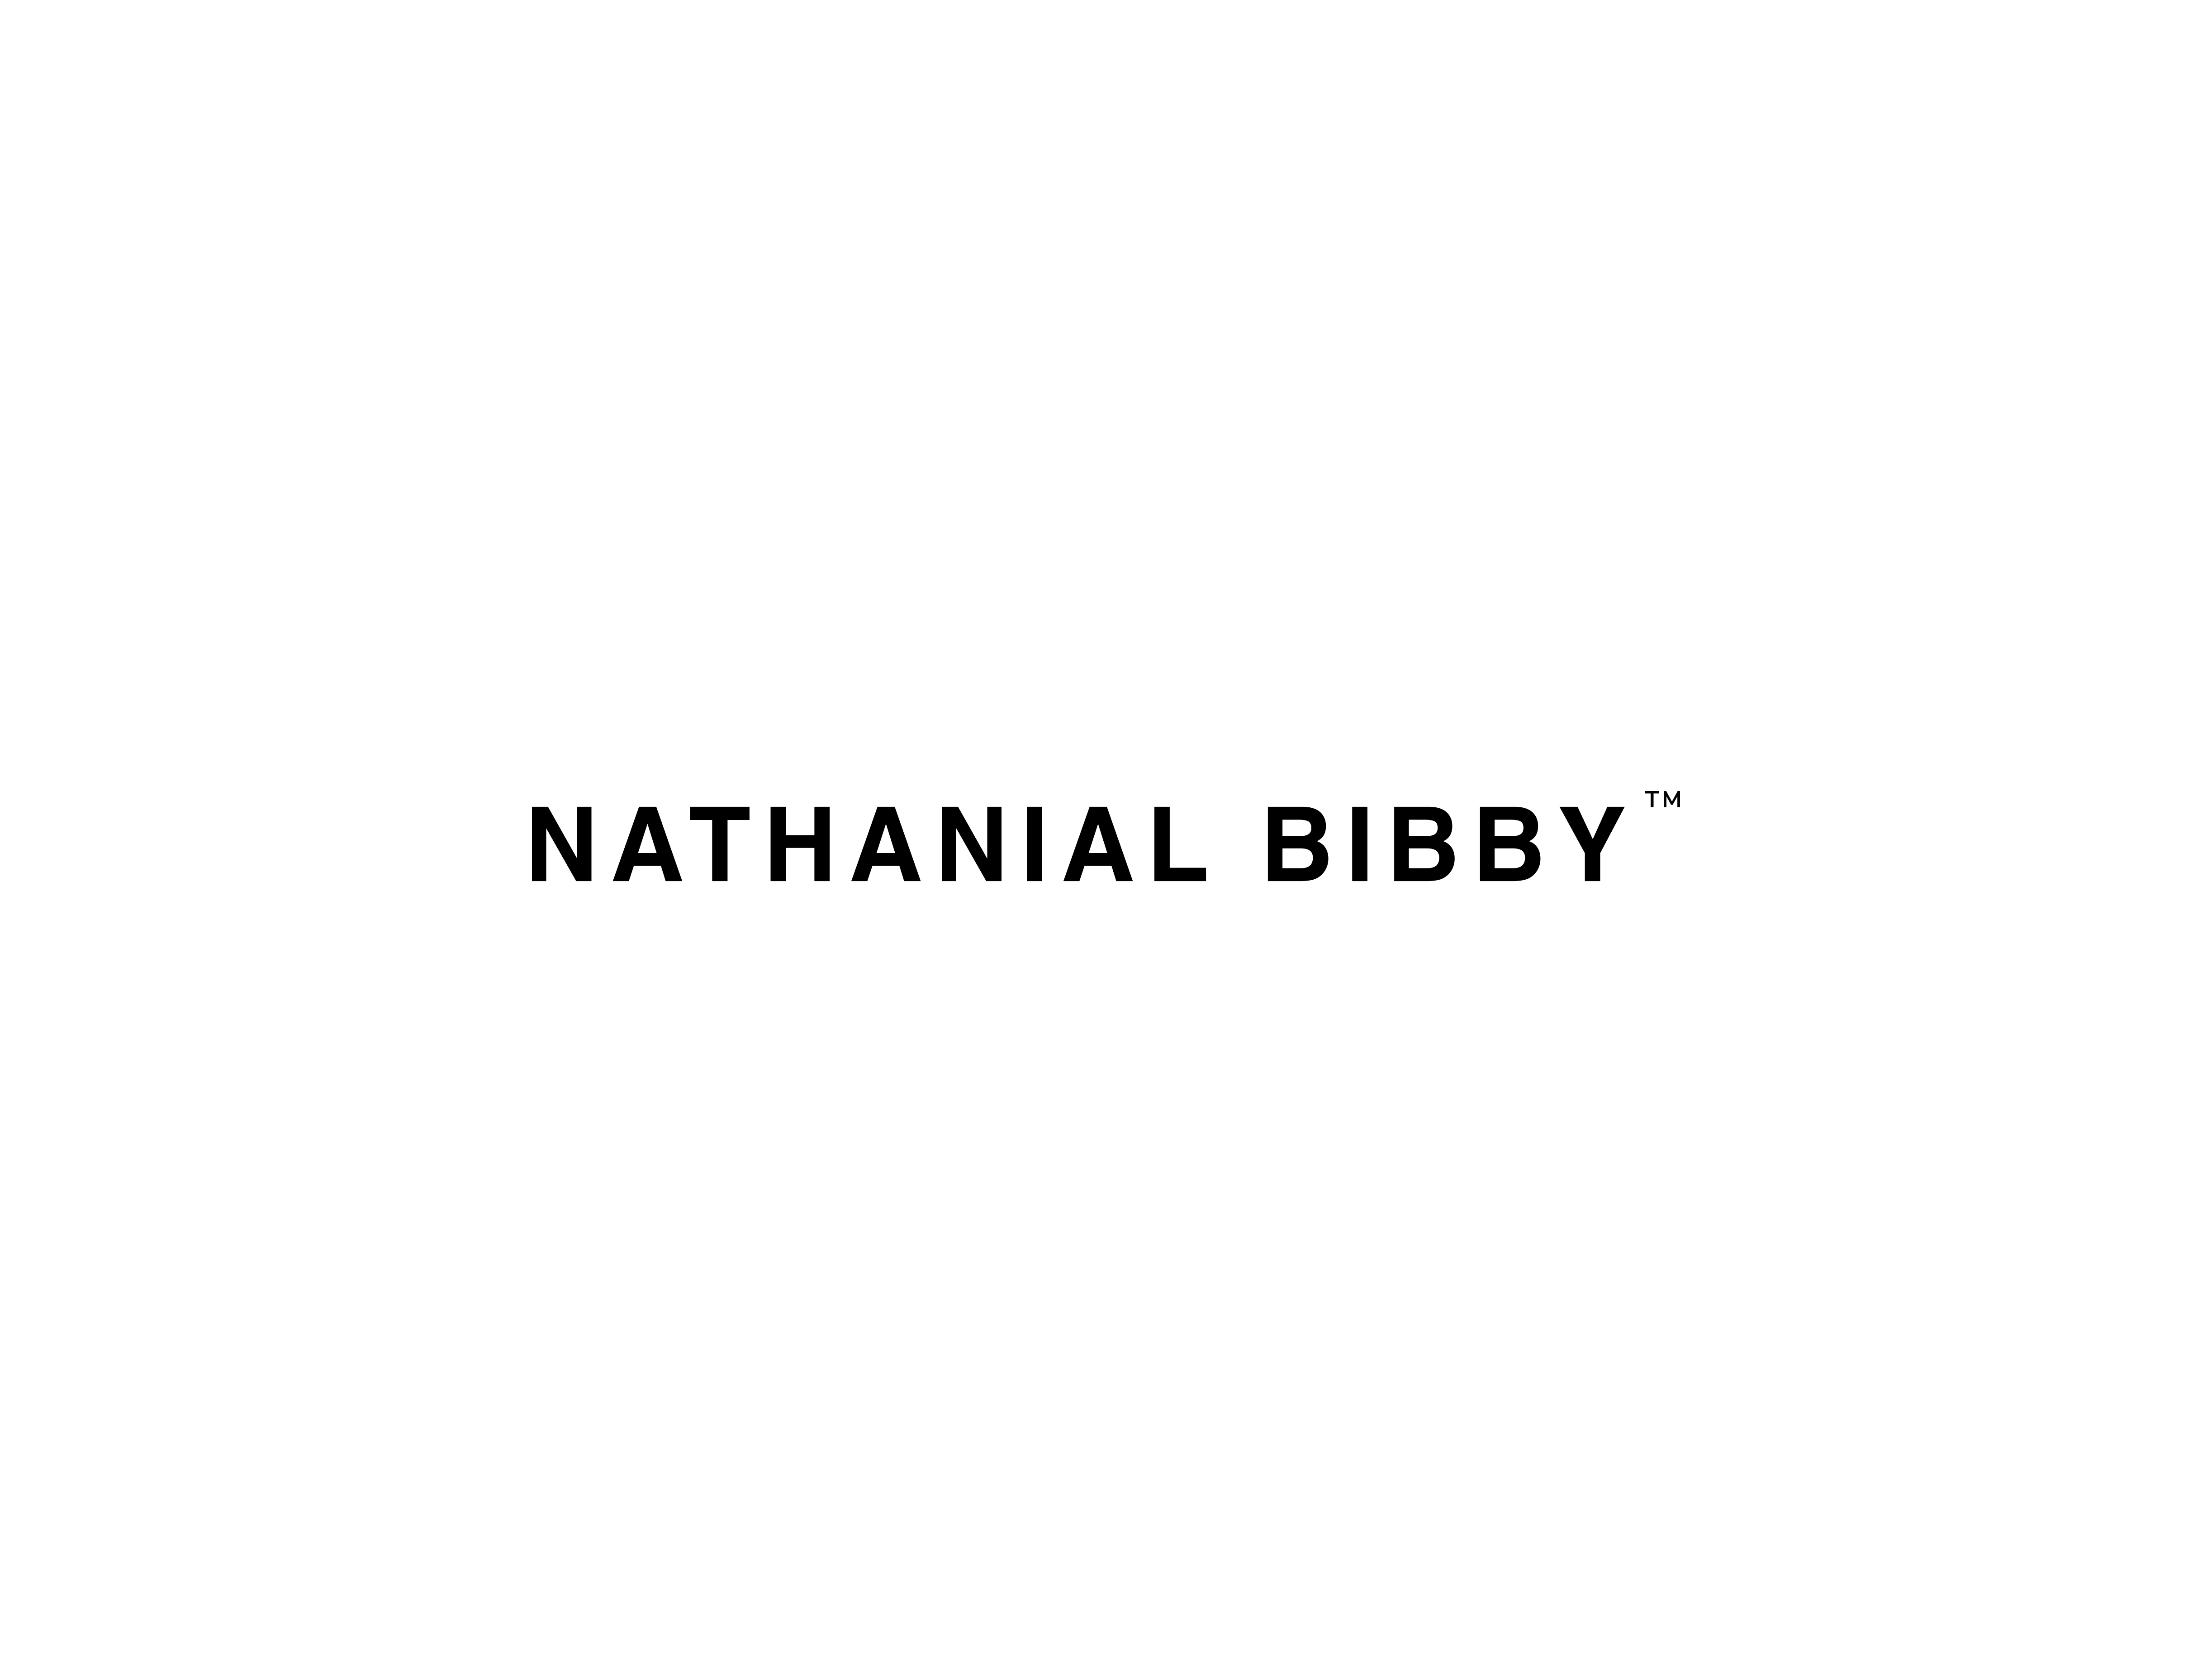 Nathanial bibby logo on white background